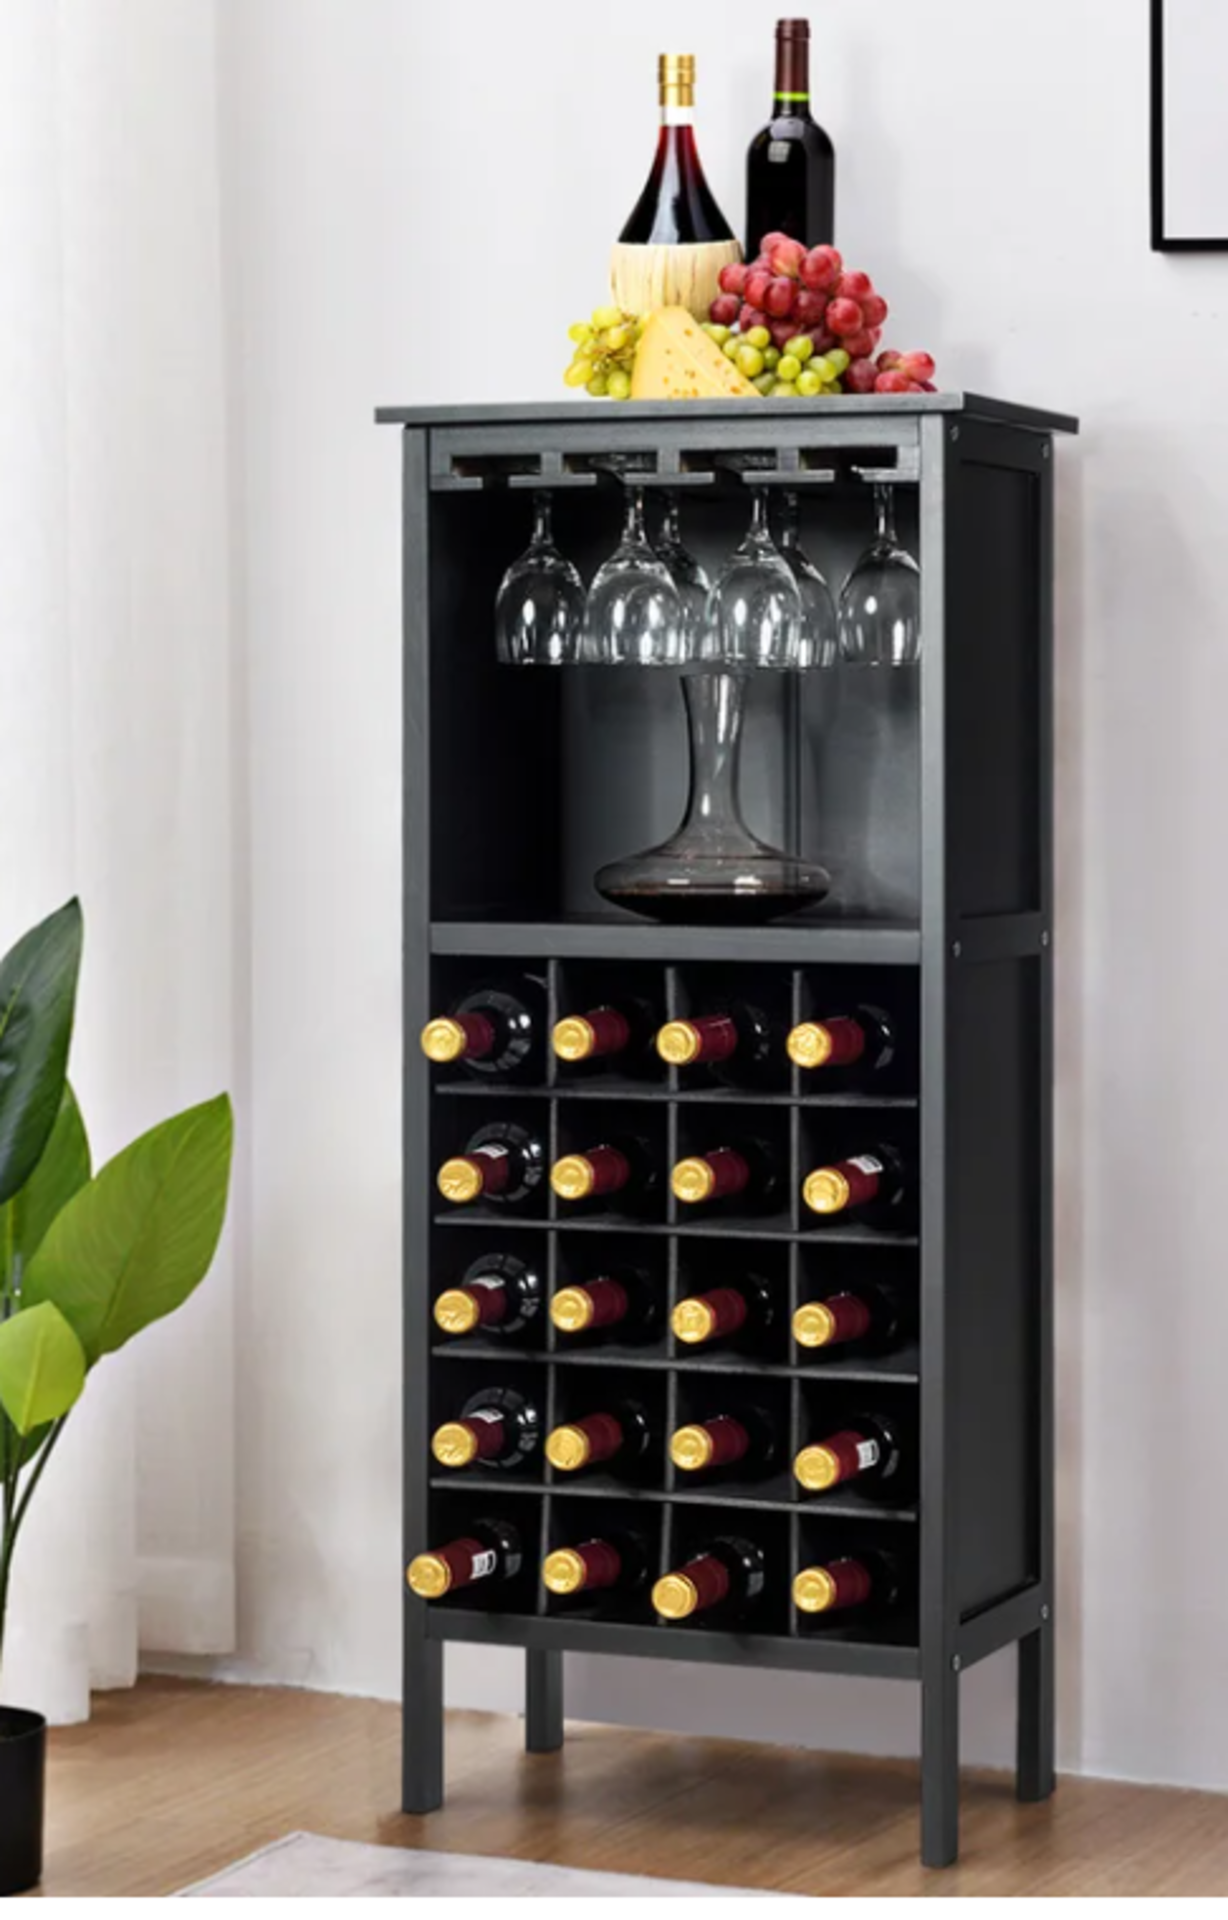 Westfield 20 Bottle Solid Wood Floor Wine Bottle & Glass Rack. Our wine cabinet is an ideal choice